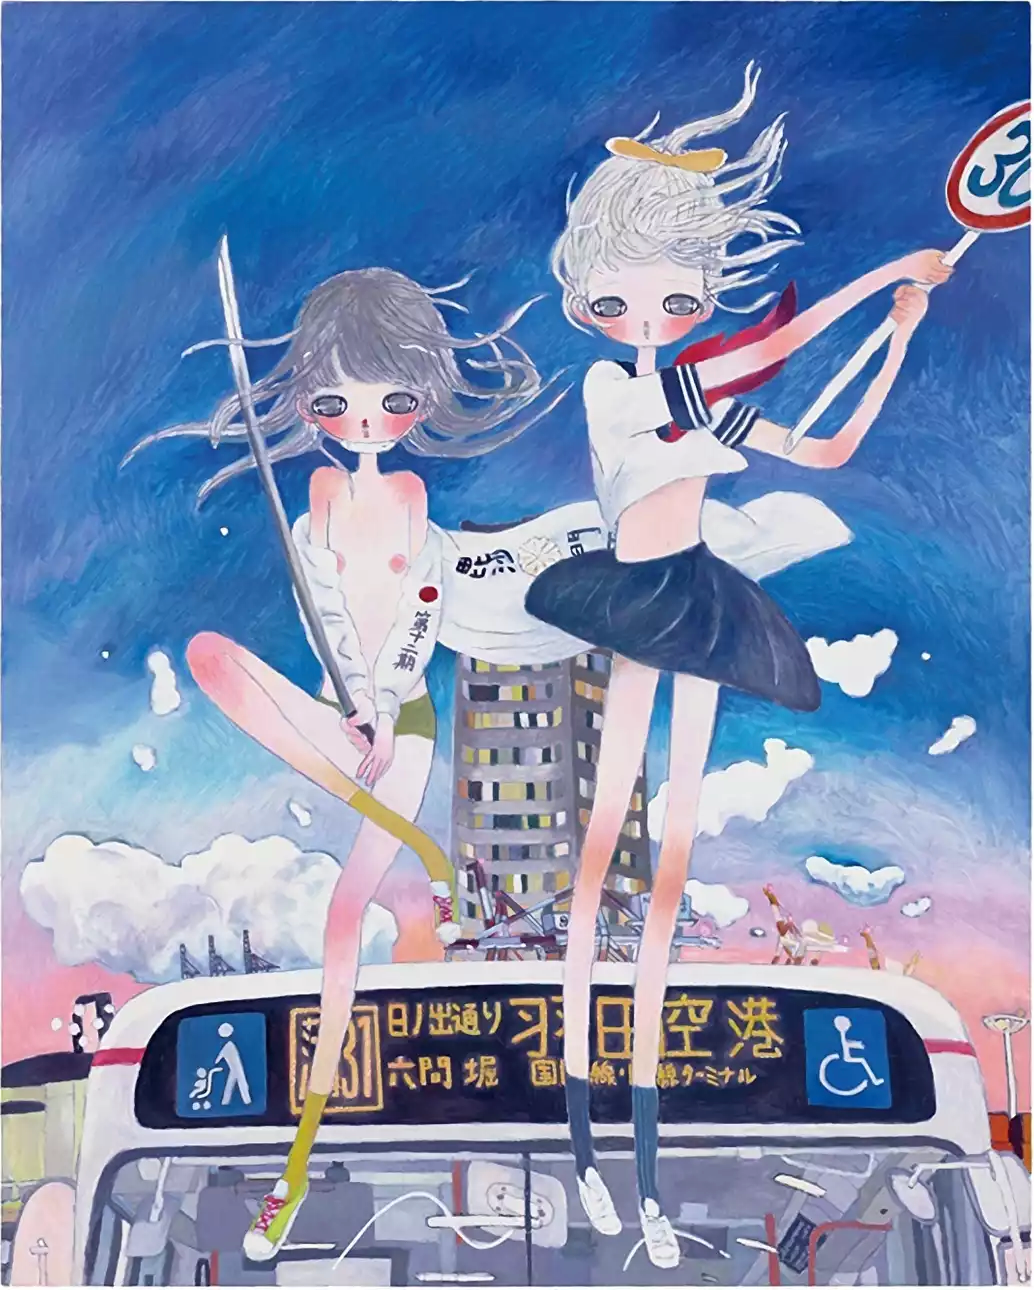 Aya Takano Art Prints: let's go, to the battle – Artrust